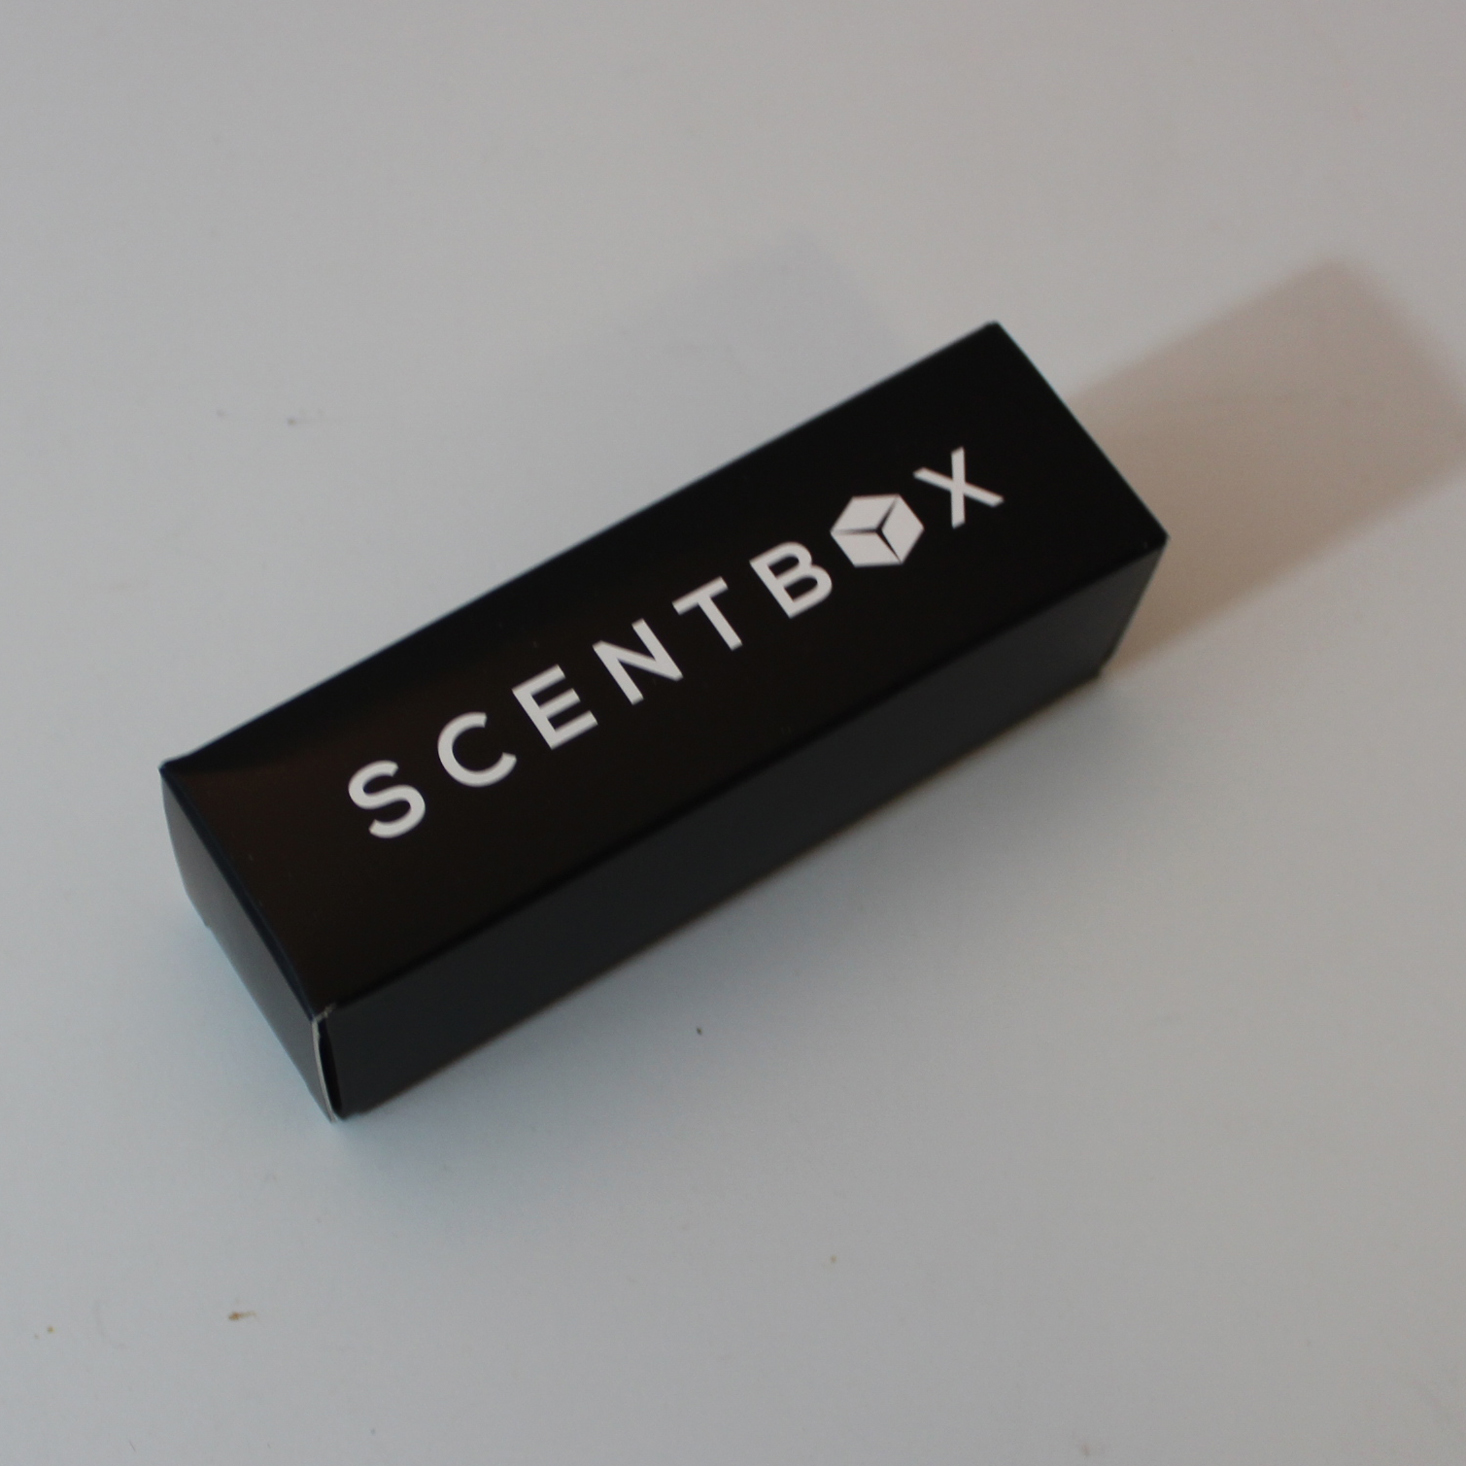 Scent Box October 2019 Black Box